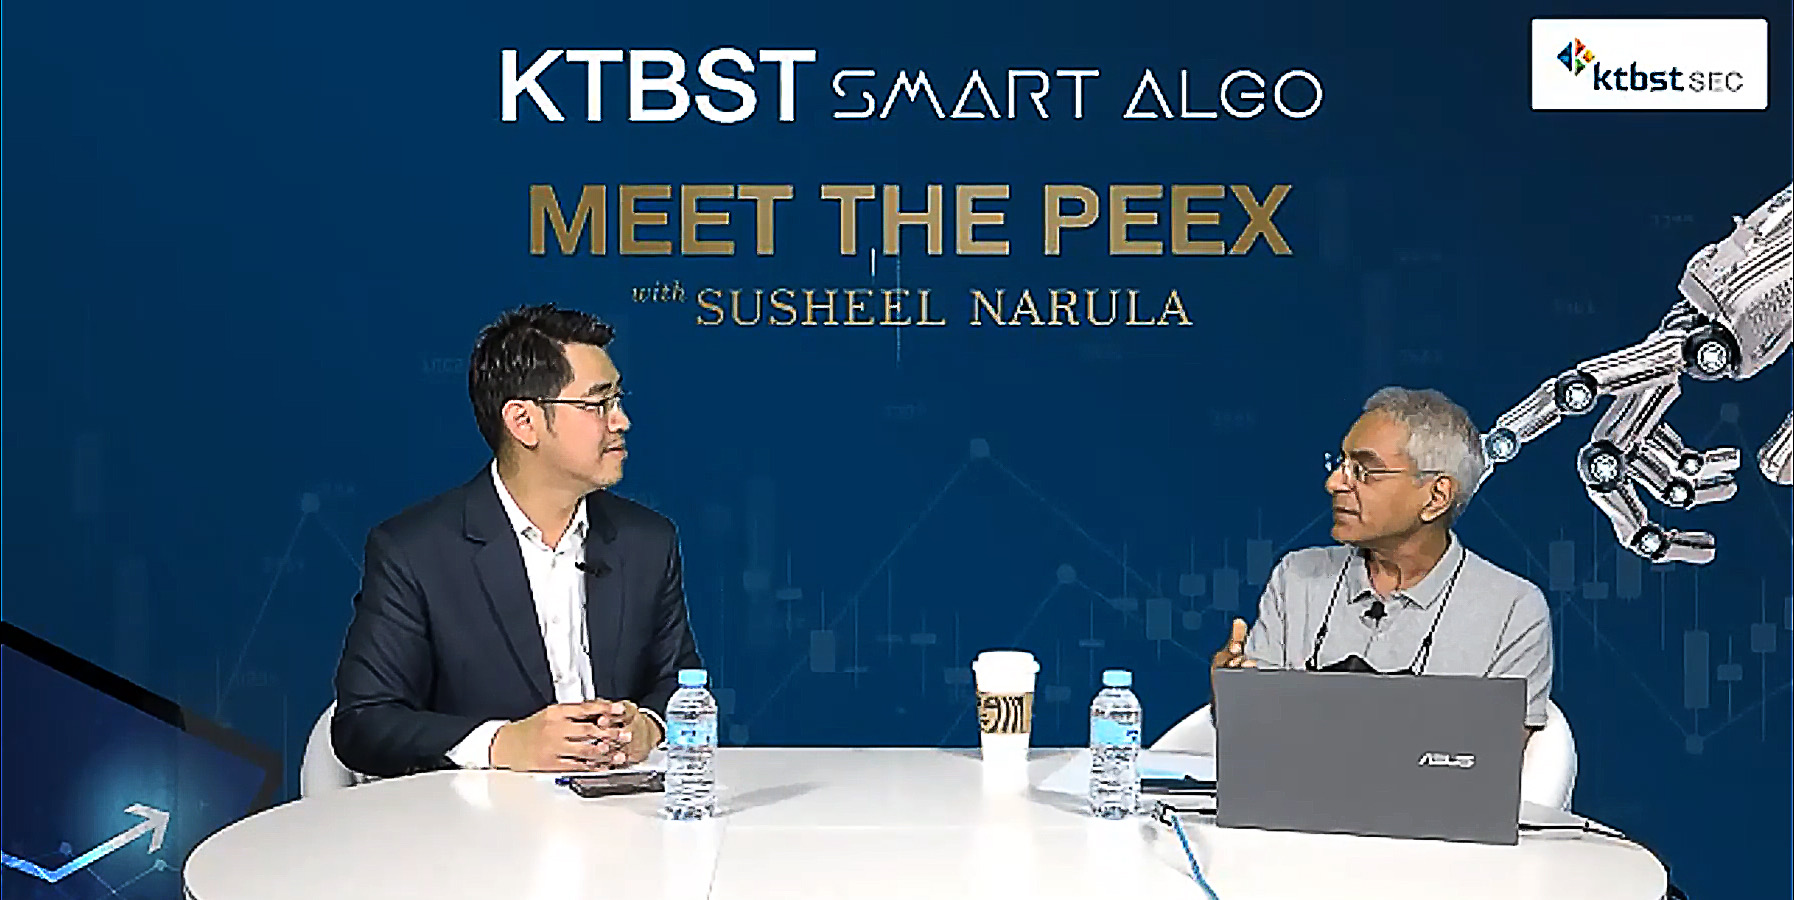 KTBST SEC จัดสัมมนาออนไลน์ “Meet the PEEX”แนะนำการลงทุนผ่านโปรแกรมเทรดหุ้นอัตโนมัติ KTBST Smart Algo